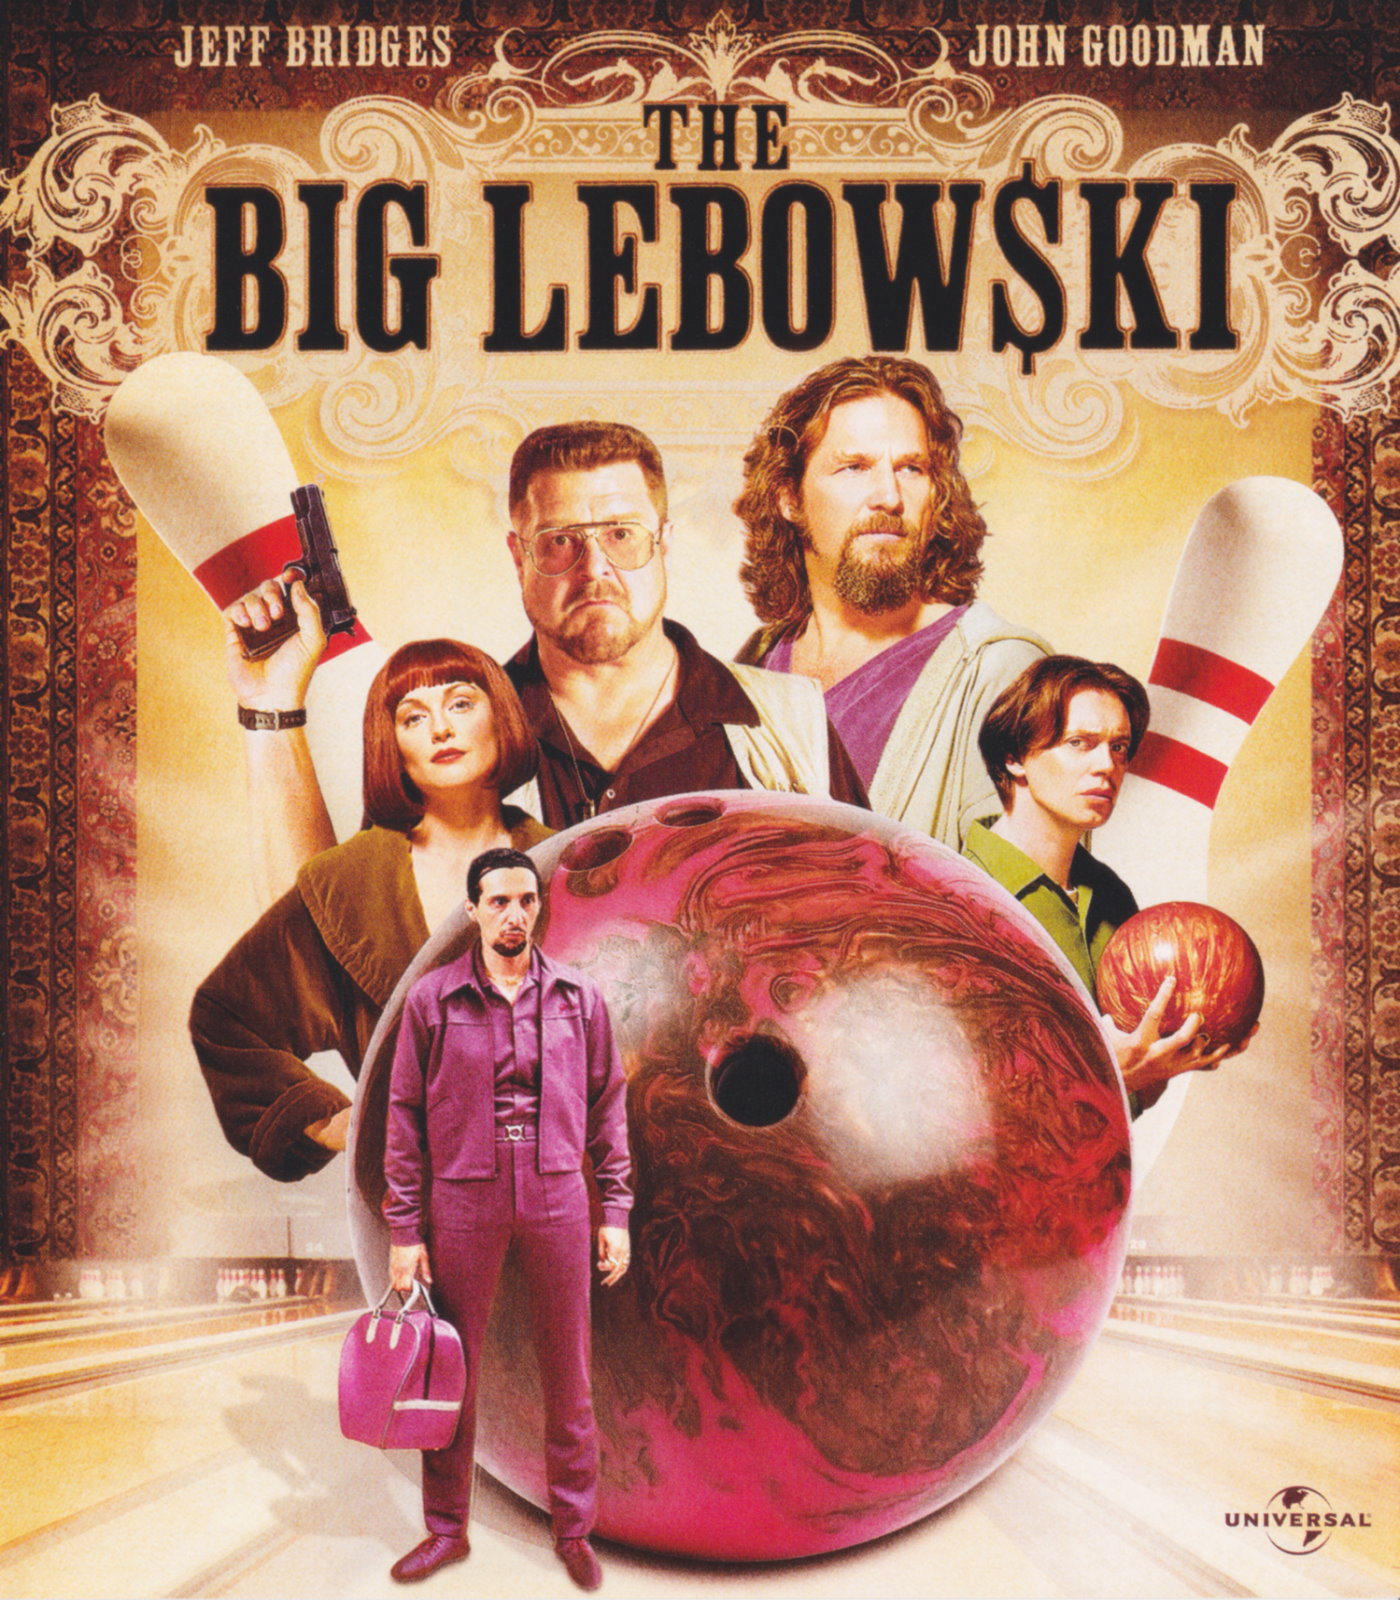 Cover - The Big Lebowski.jpg